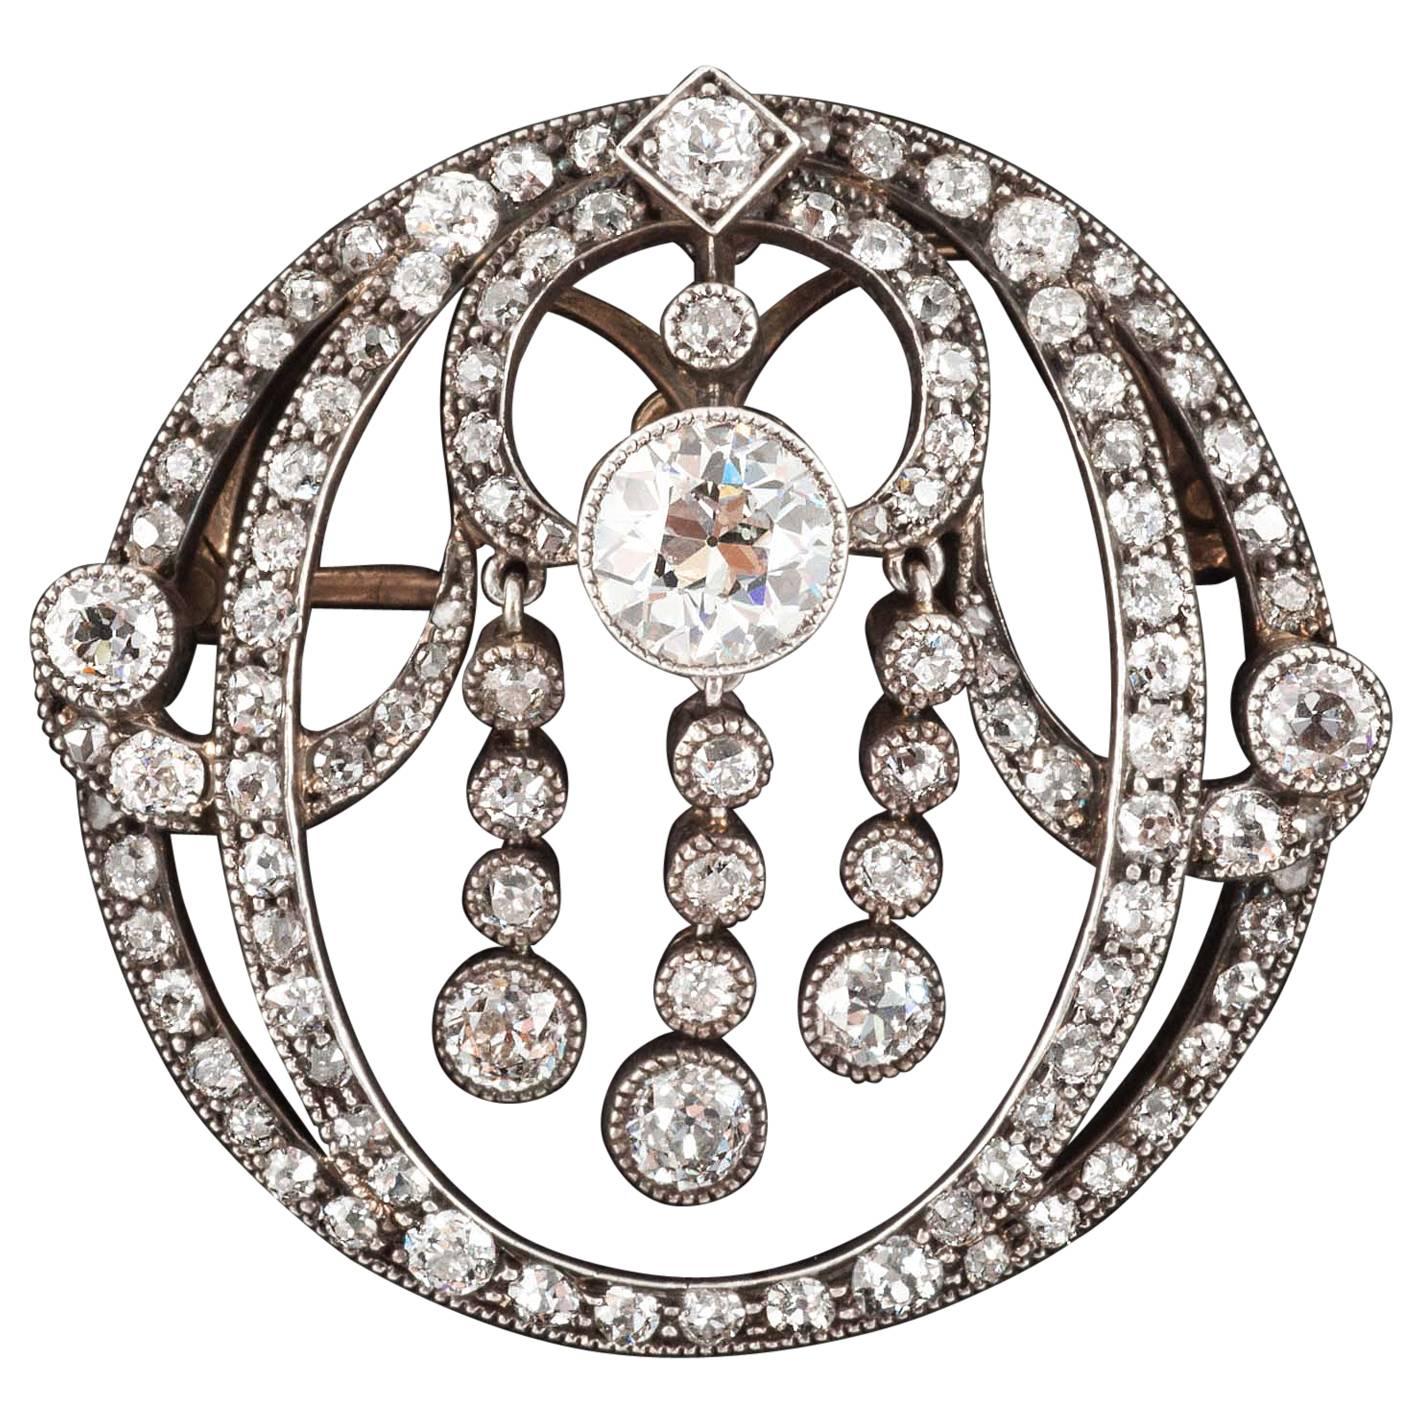 Victorian English diamond set brooch pendant